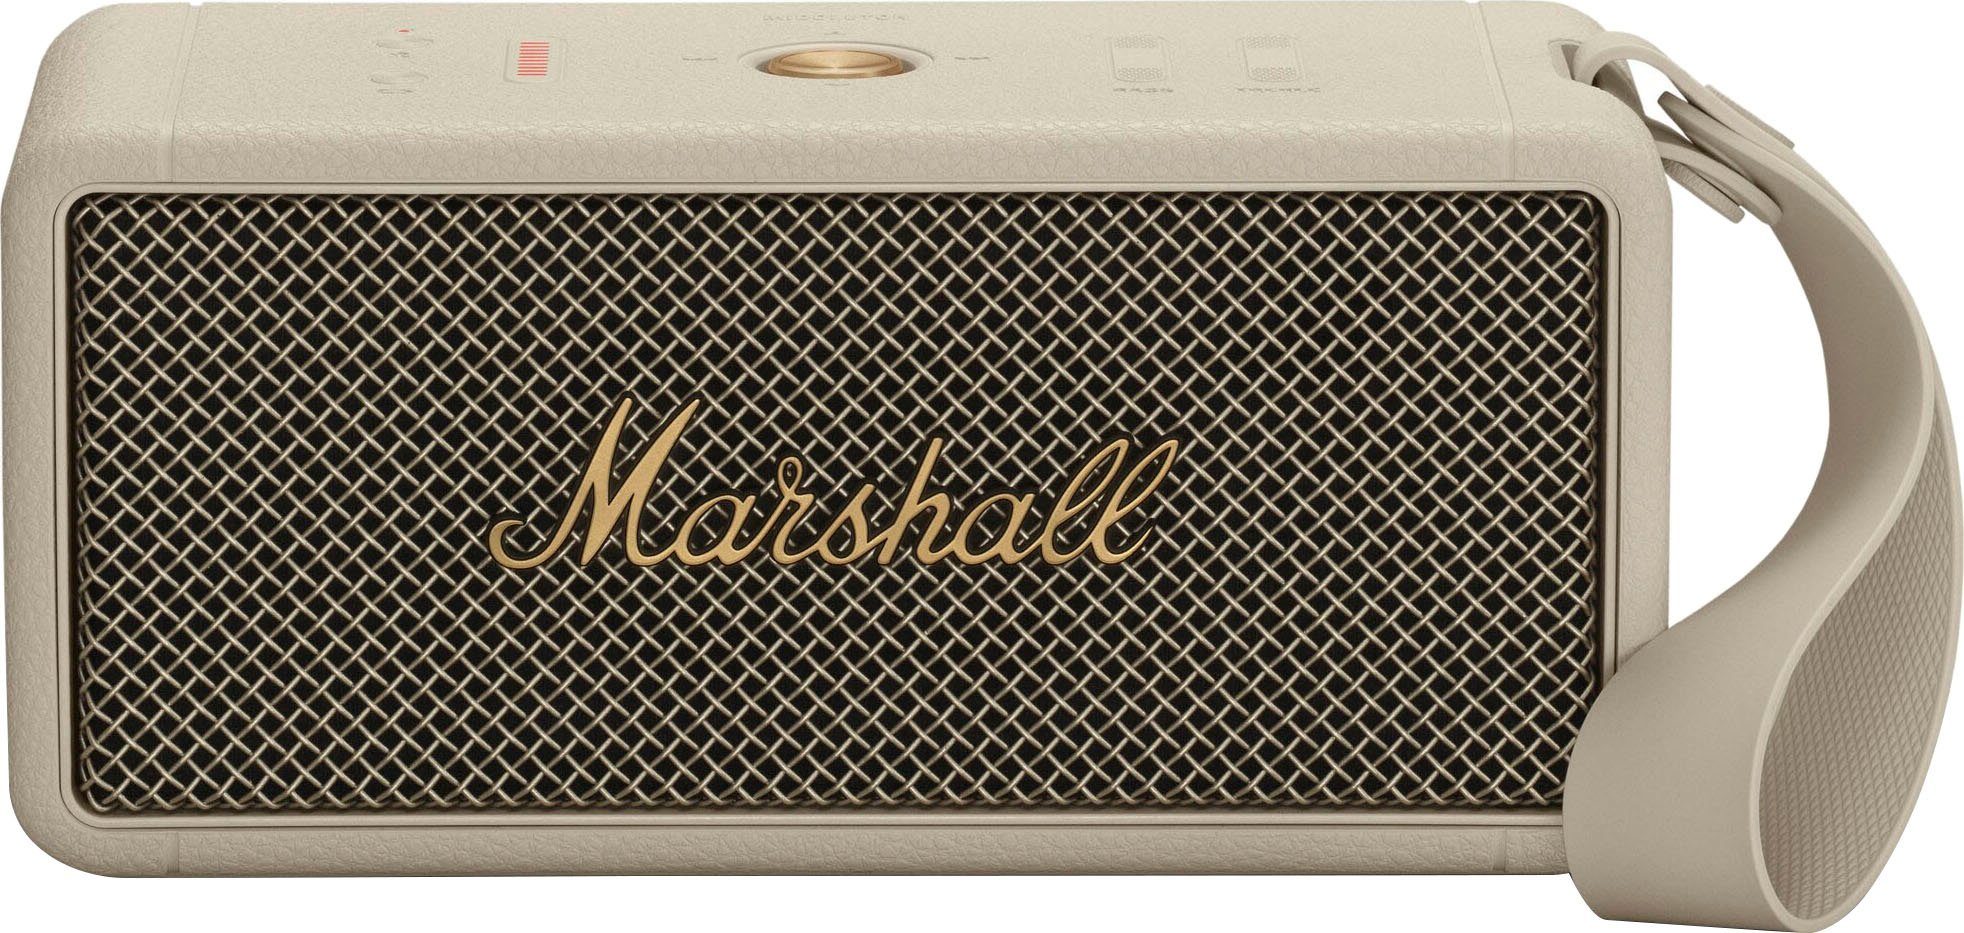 Middleton (Bluetooth, W) Stereo Marshall Cream Lautsprecher 110